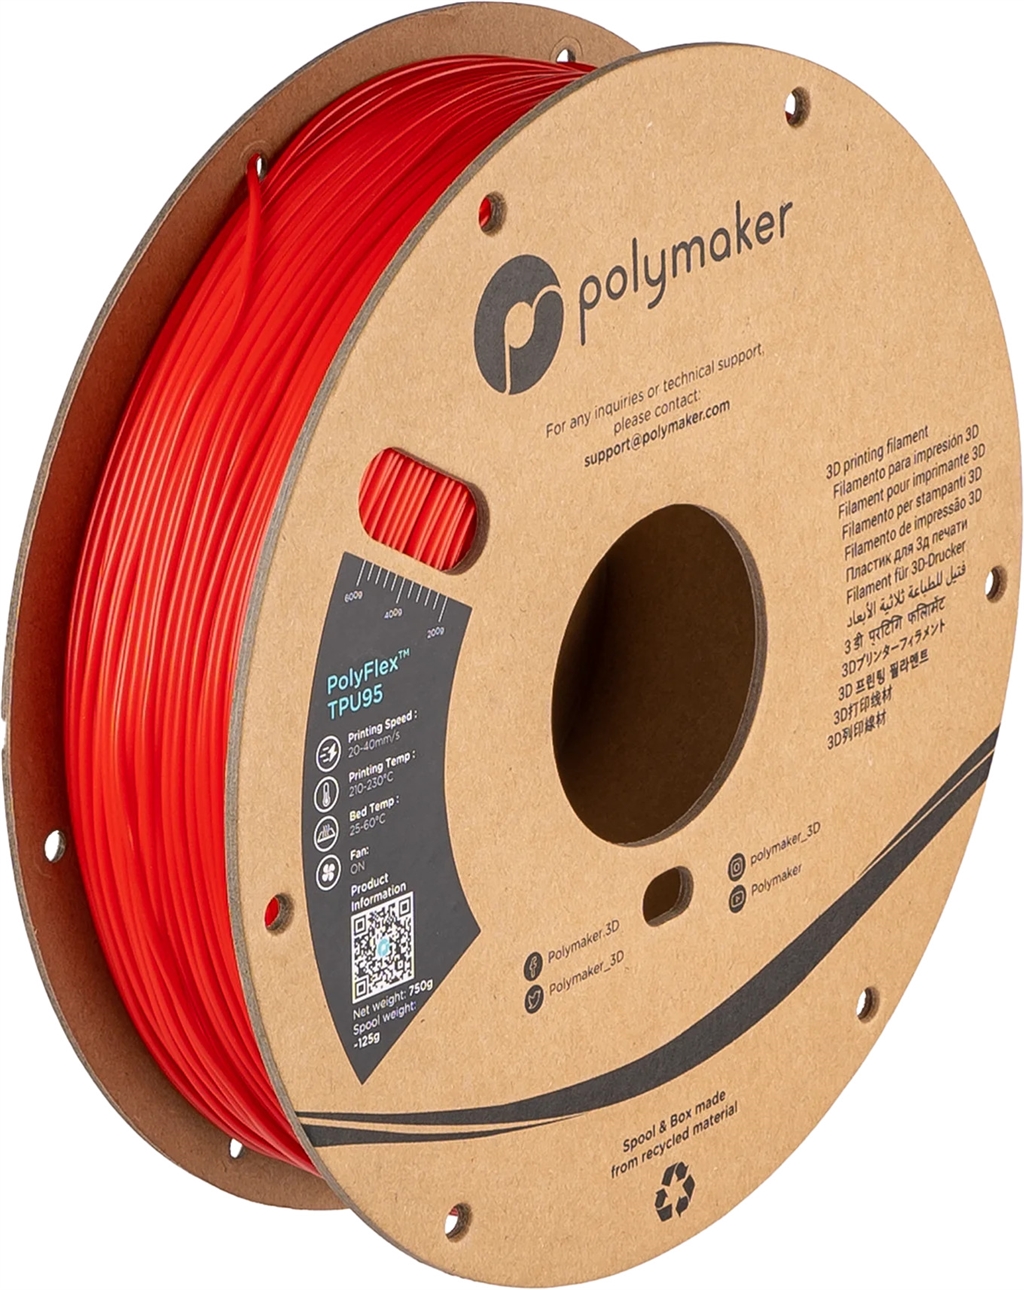 PolyFlex™ TPU95 Series - Red